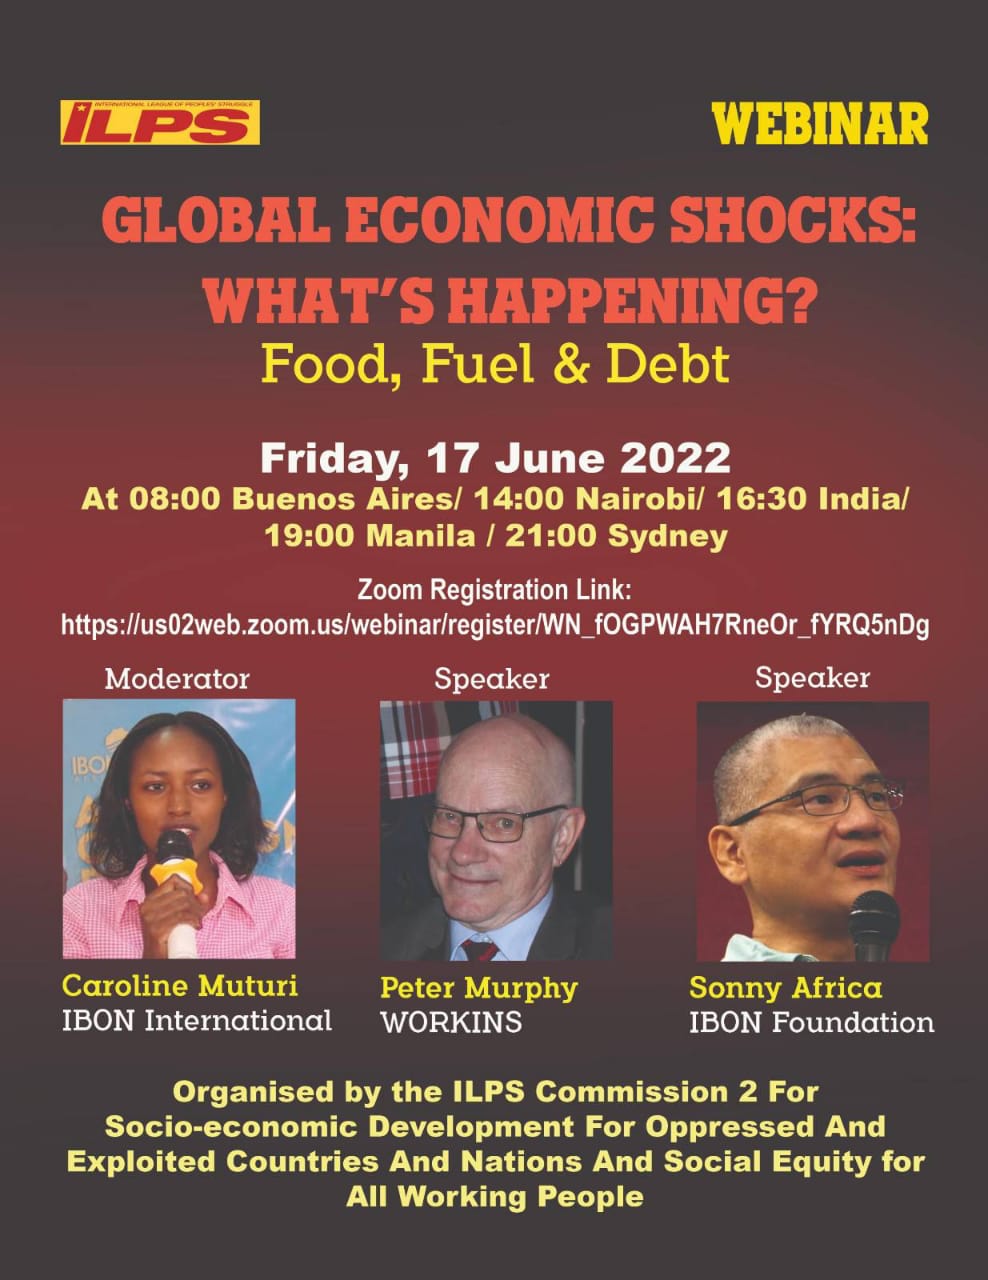 [WEBINAR] Global Economic Shocks: What’s Happening? Focus on Food, Fuel and Debt